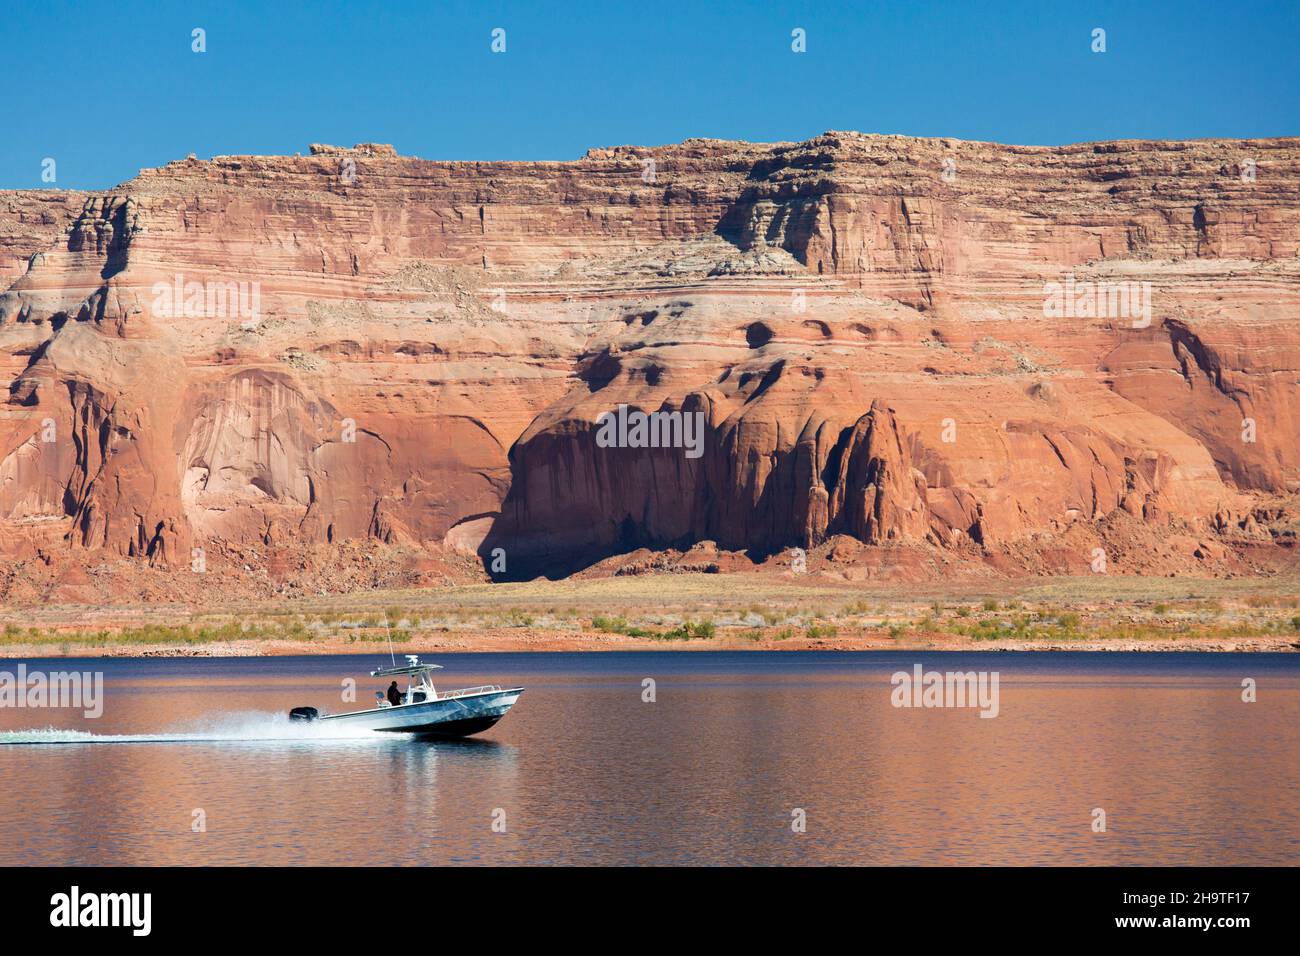 Glen Canyon National Recreation Area, Utah, USA. Small boat speeding across Lake Powell beneath high red sandstone cliffs. Stock Photo